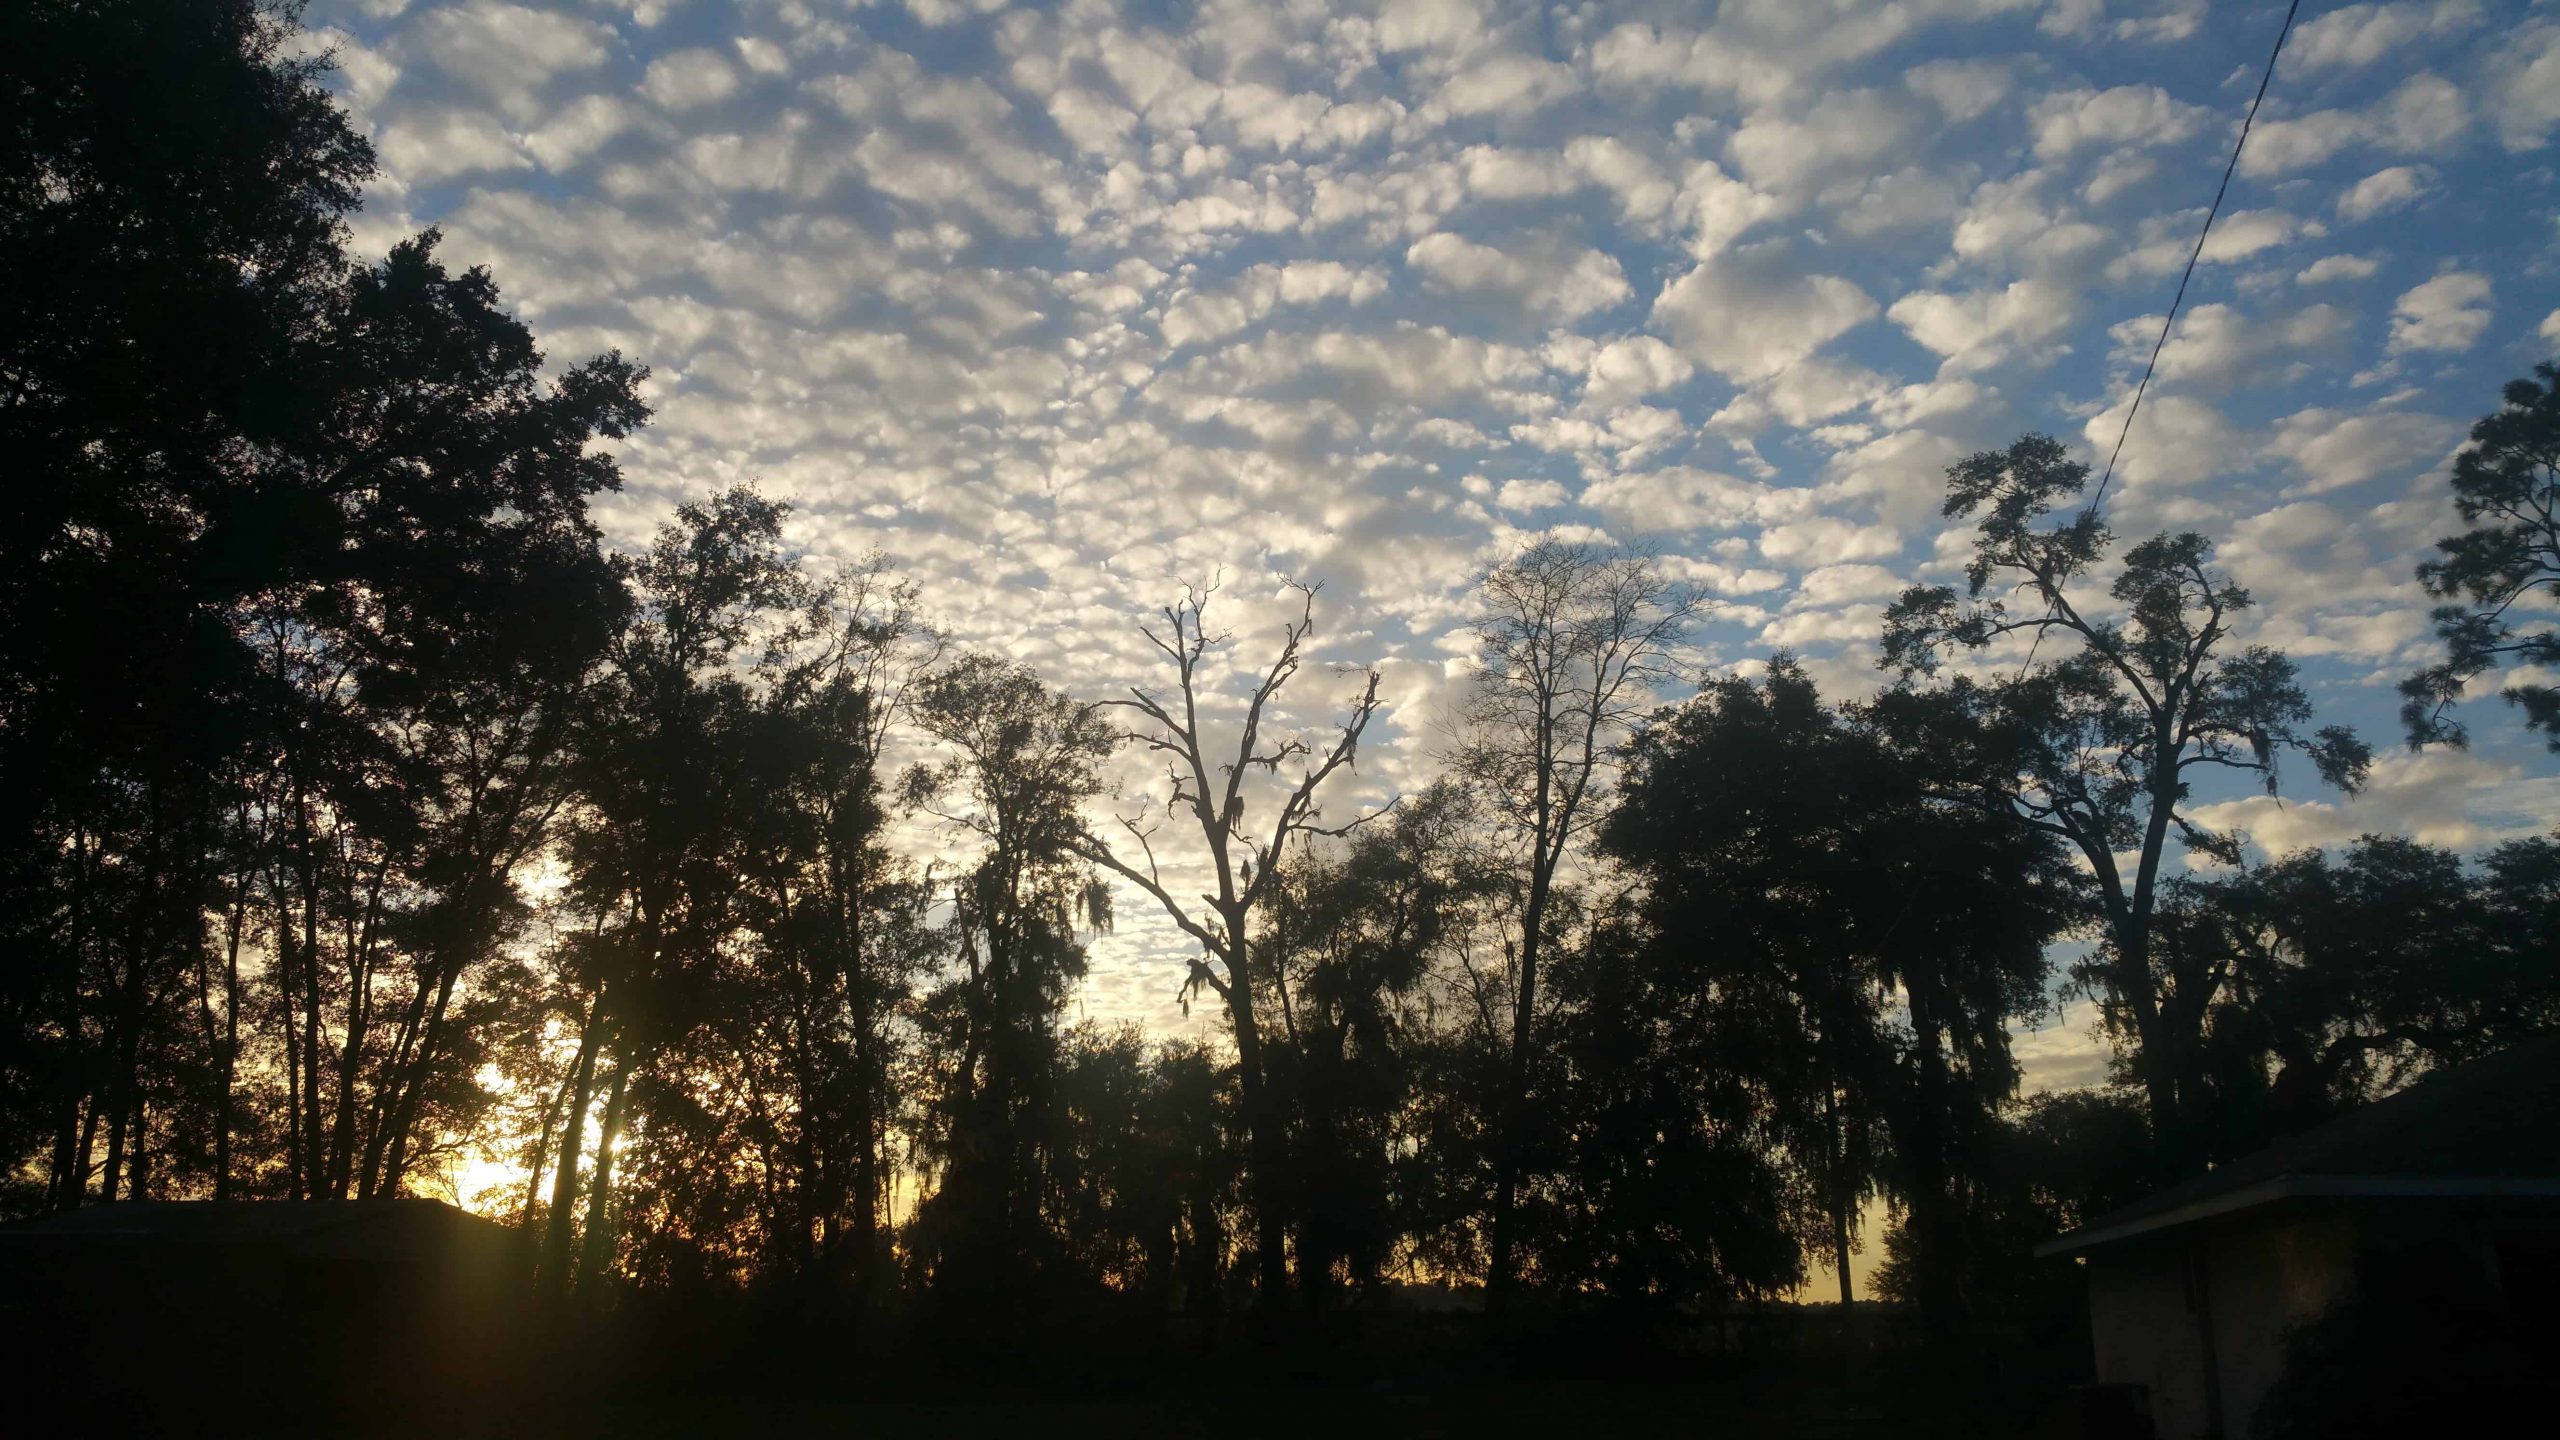 Clouds - December 14, 2017 - 6